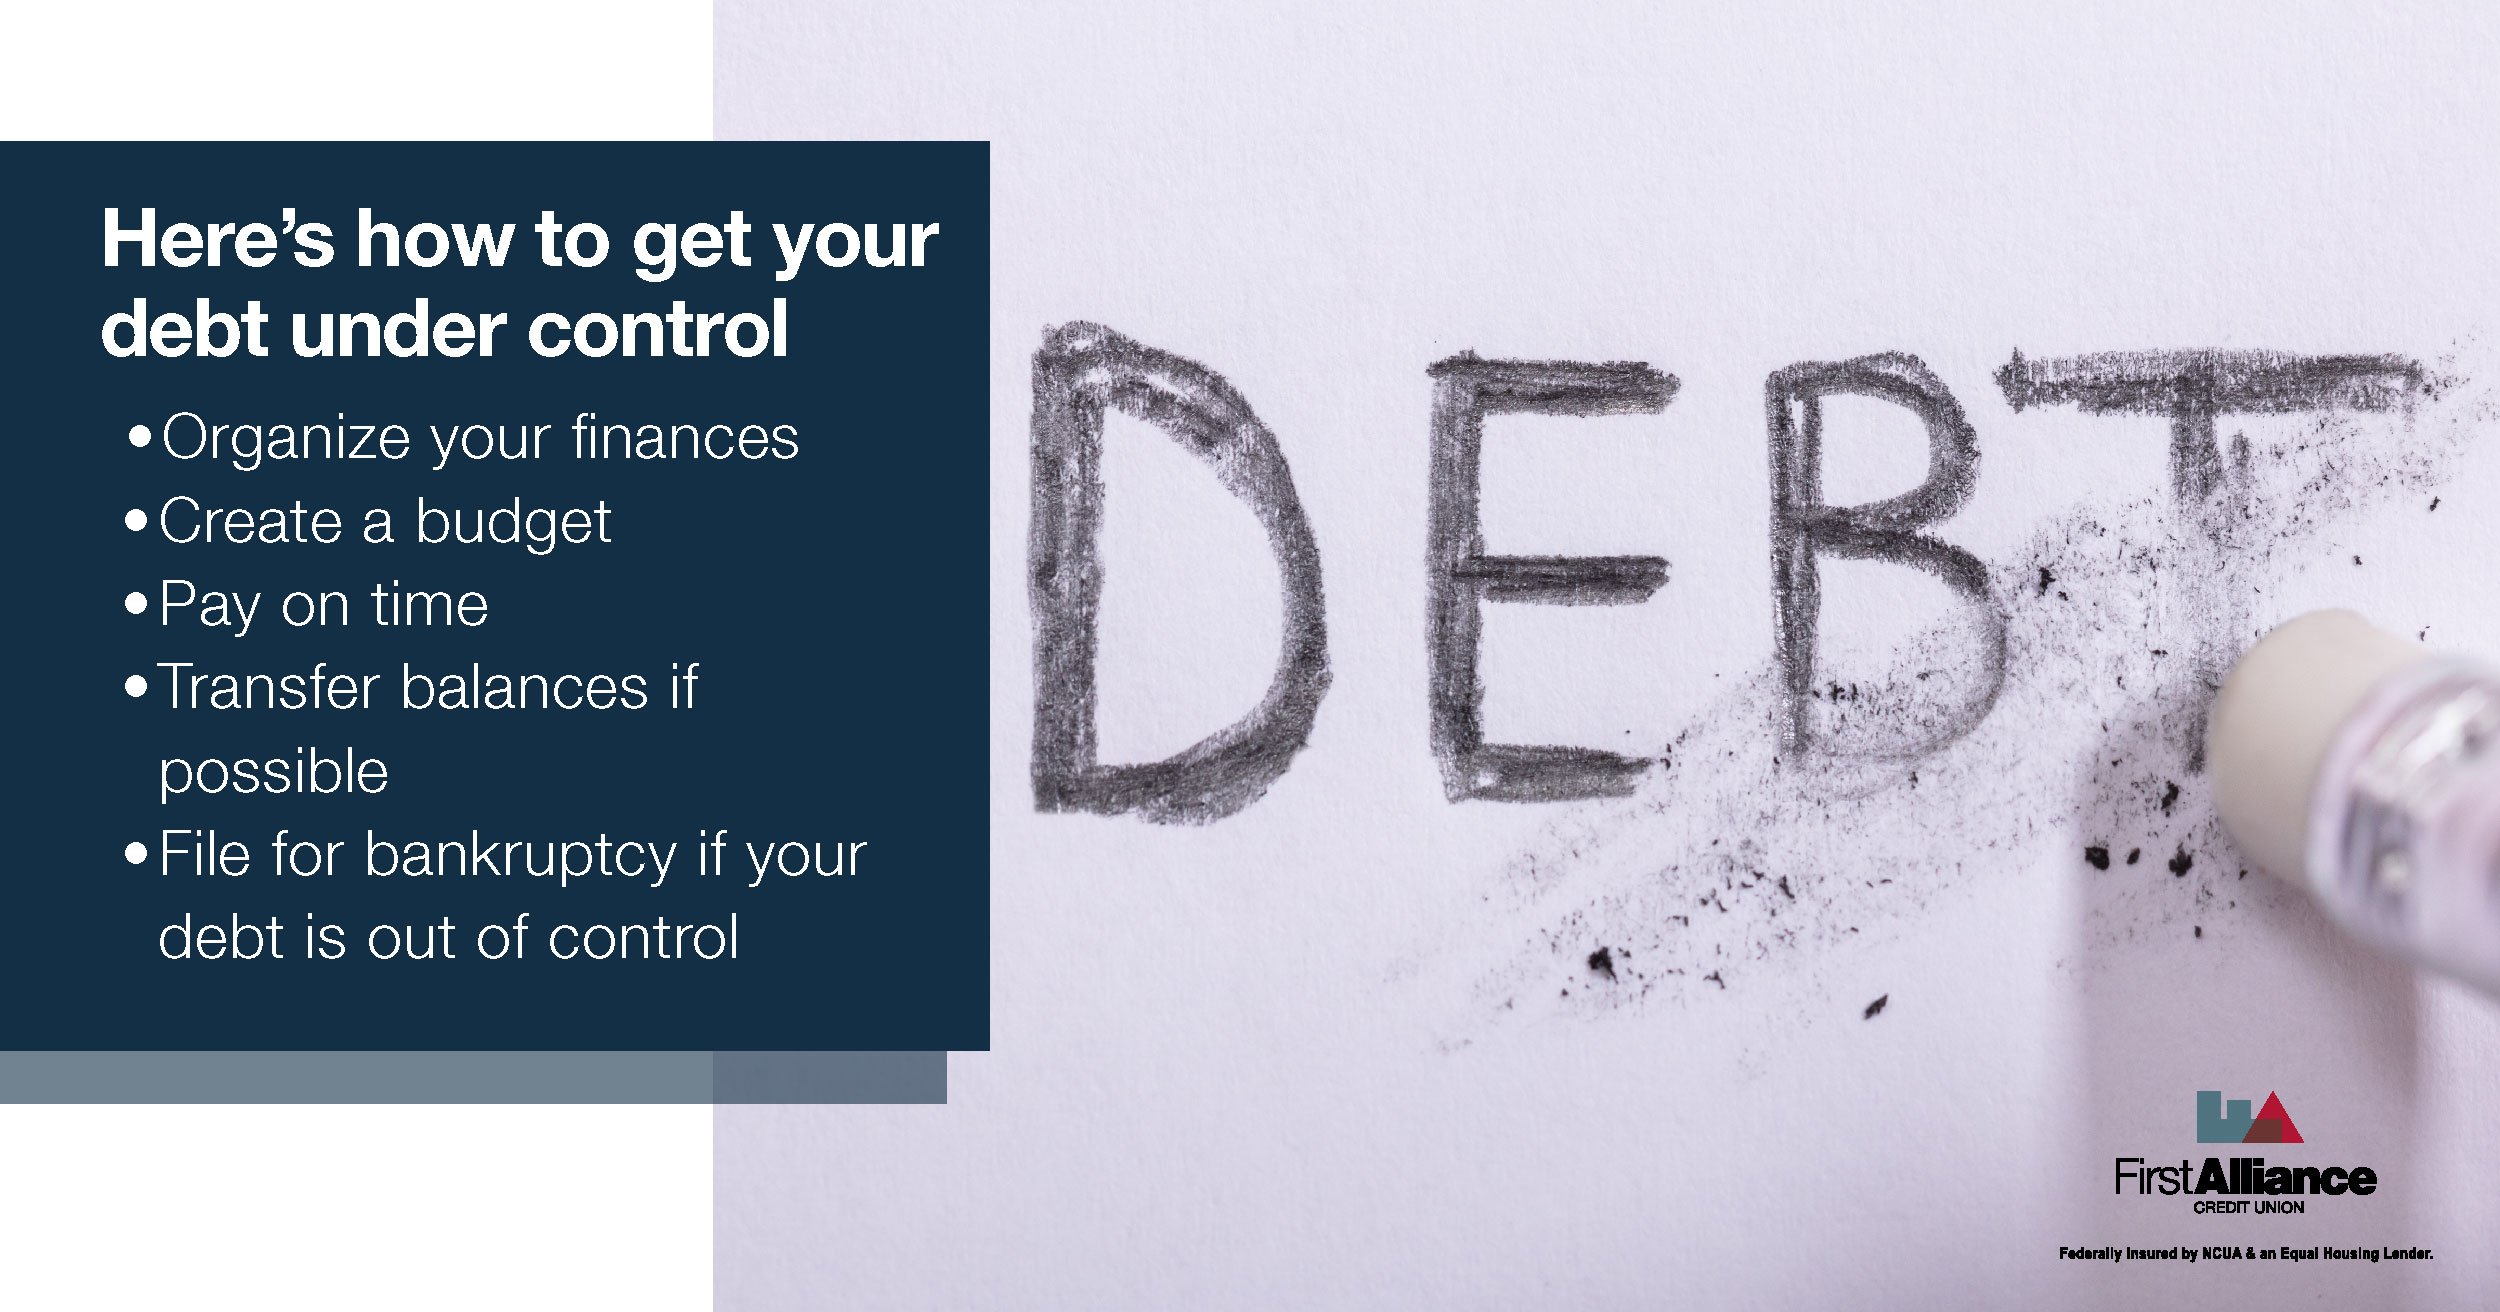 5 steps to get debt under control